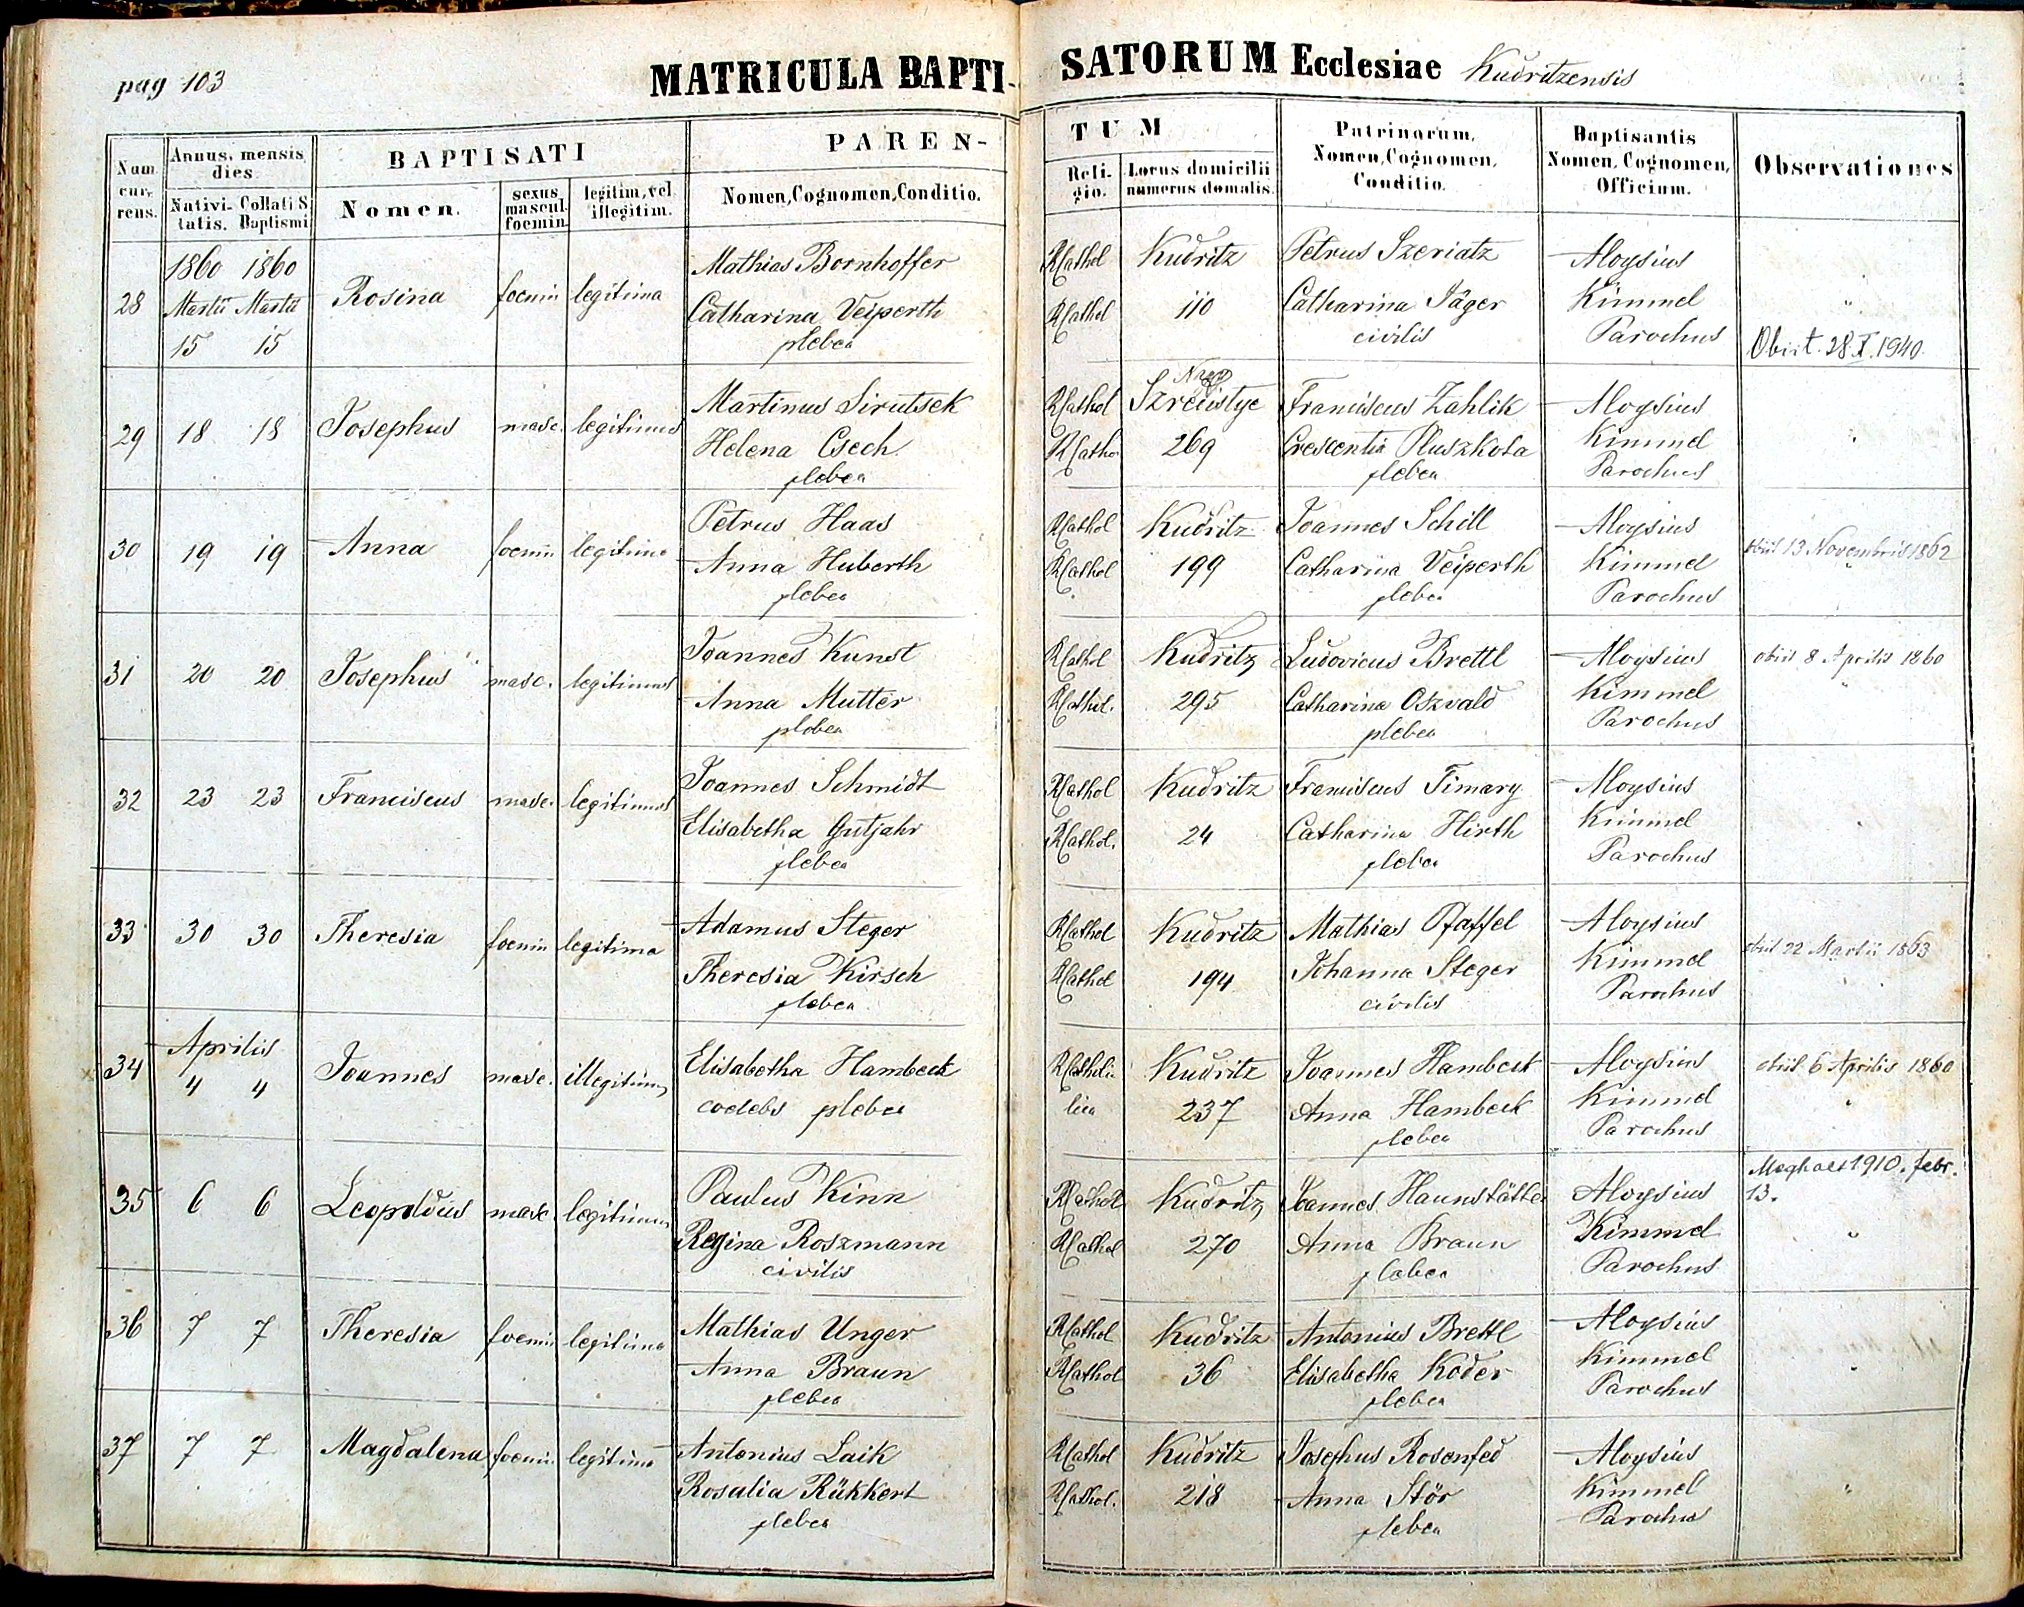 images/church_records/BIRTHS/1852-1870B/103